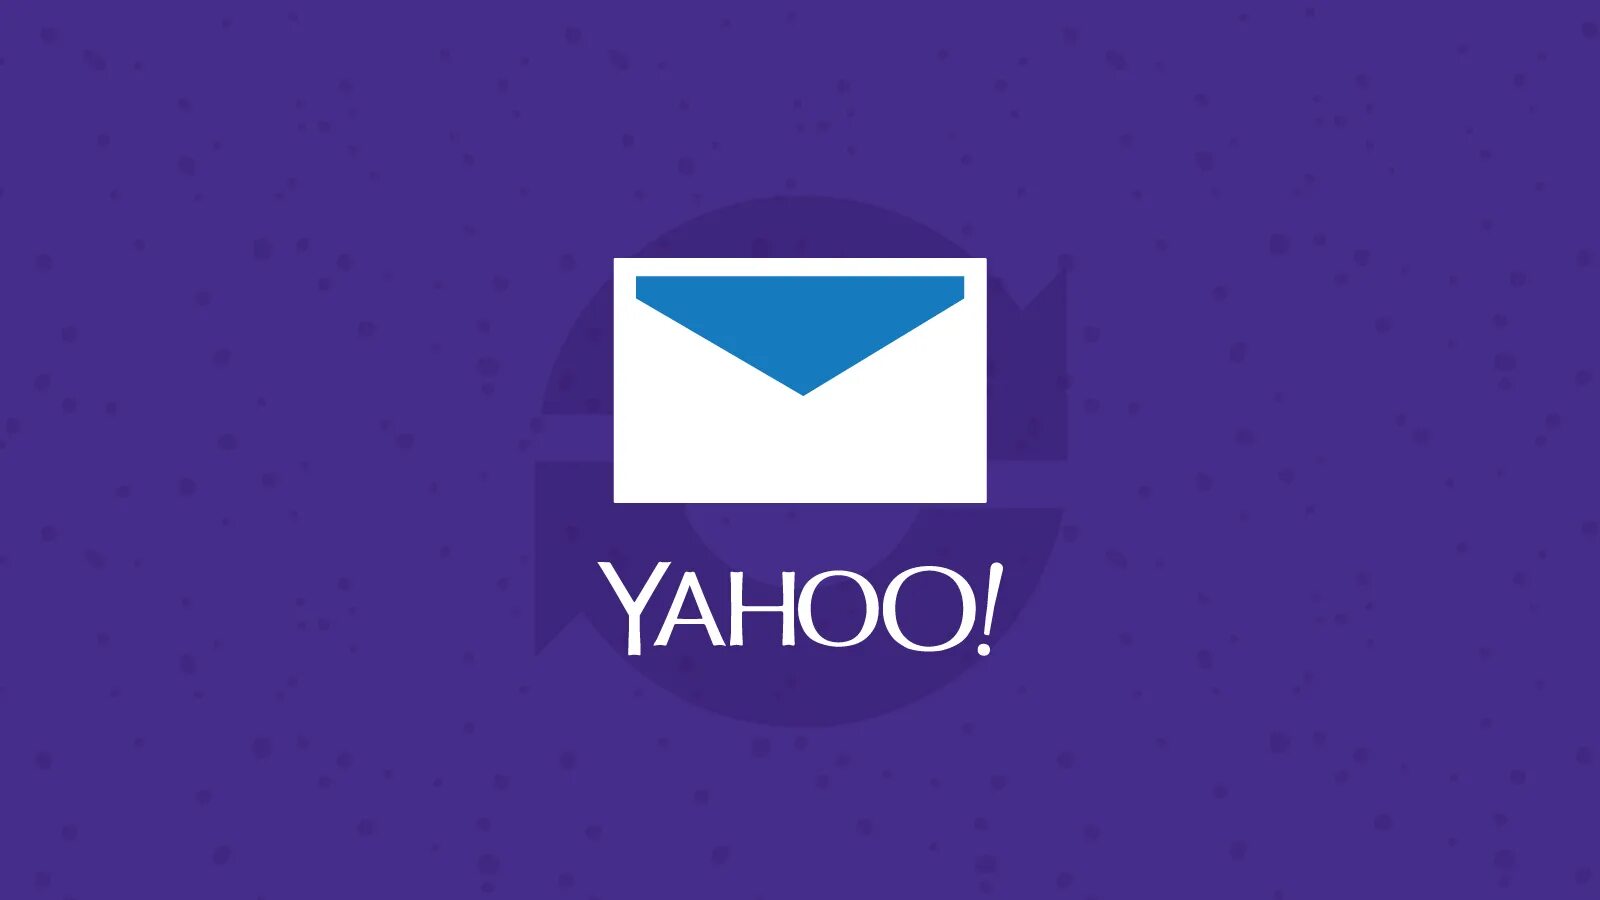 Https yahoo mail. Yahoo!. Яху почта. Электронная почта yahoo. Yahoo mail картинки.